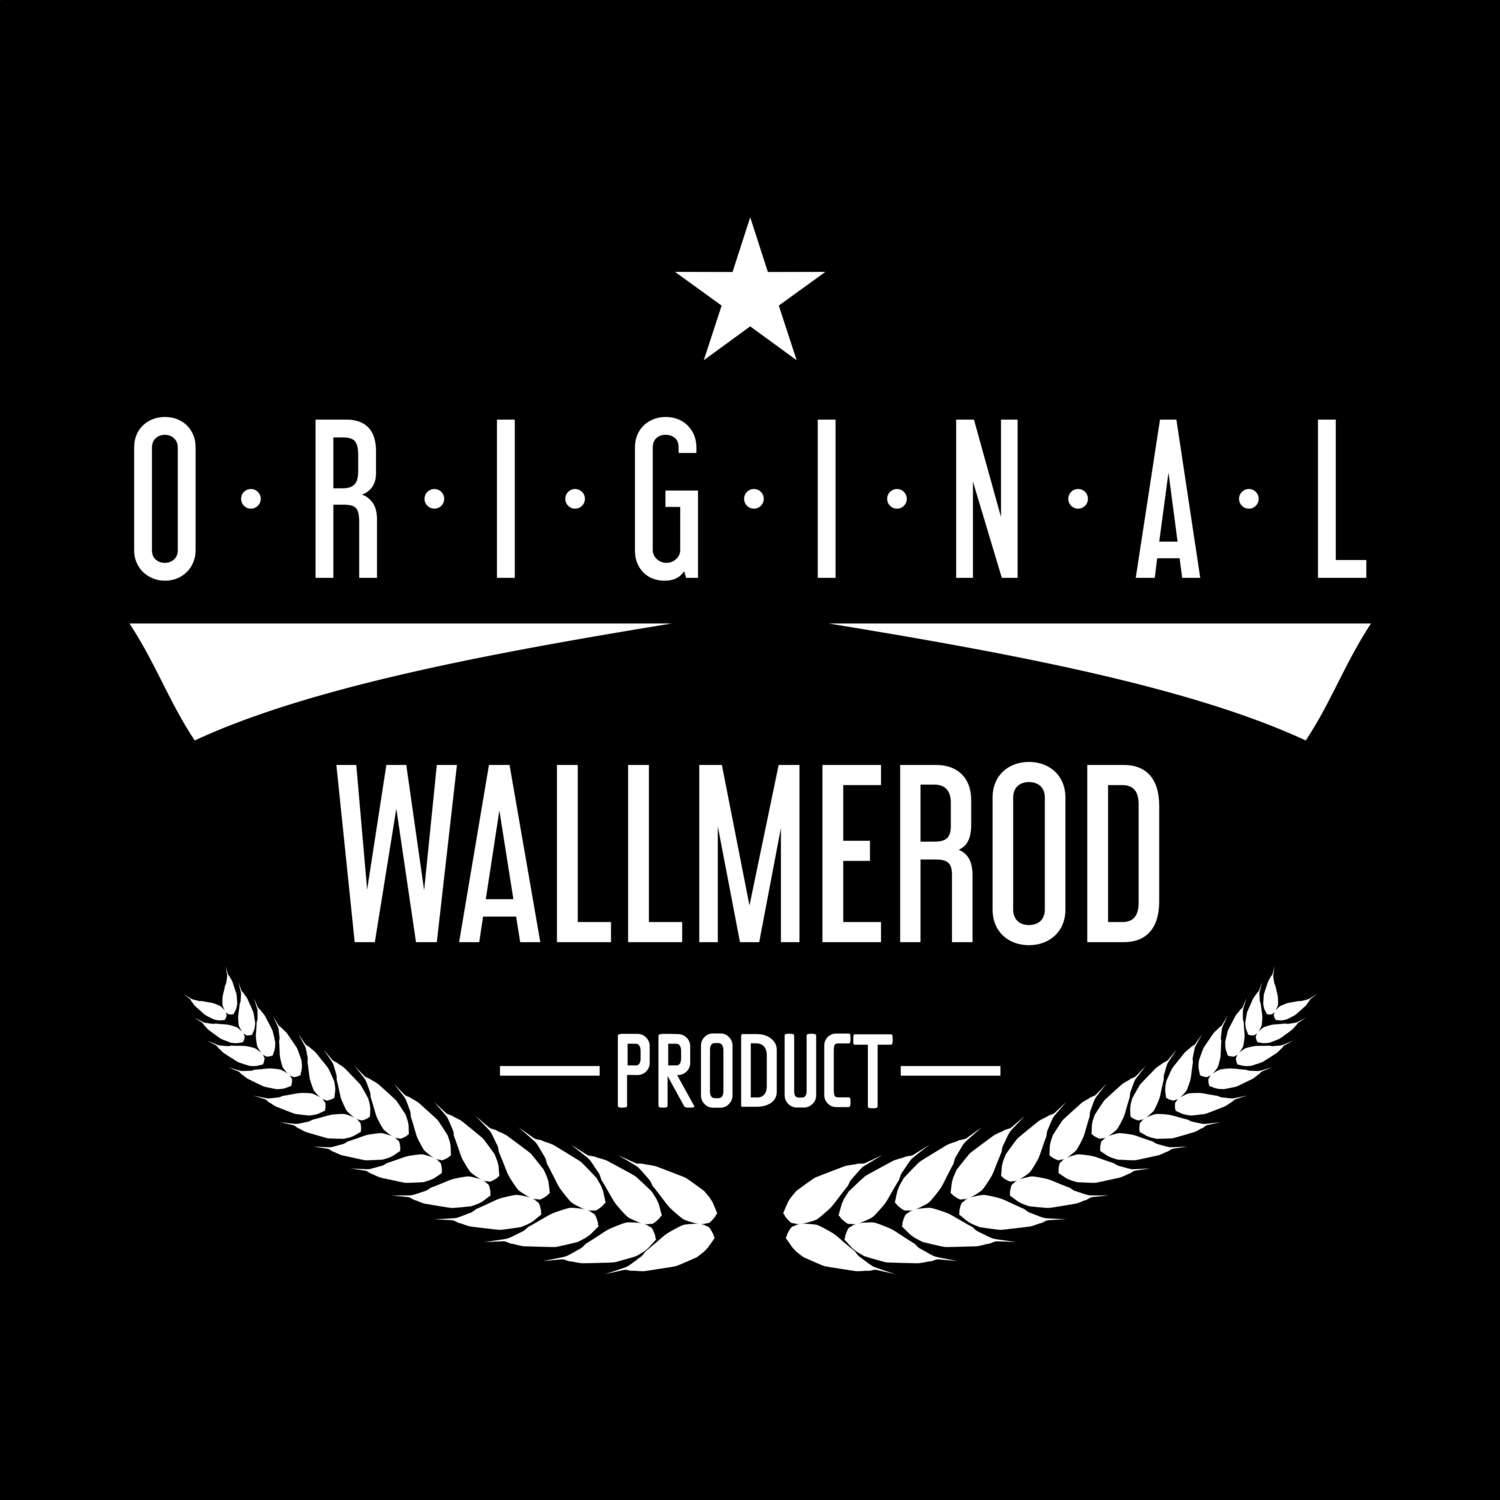 Wallmerod T-Shirt »Original Product«